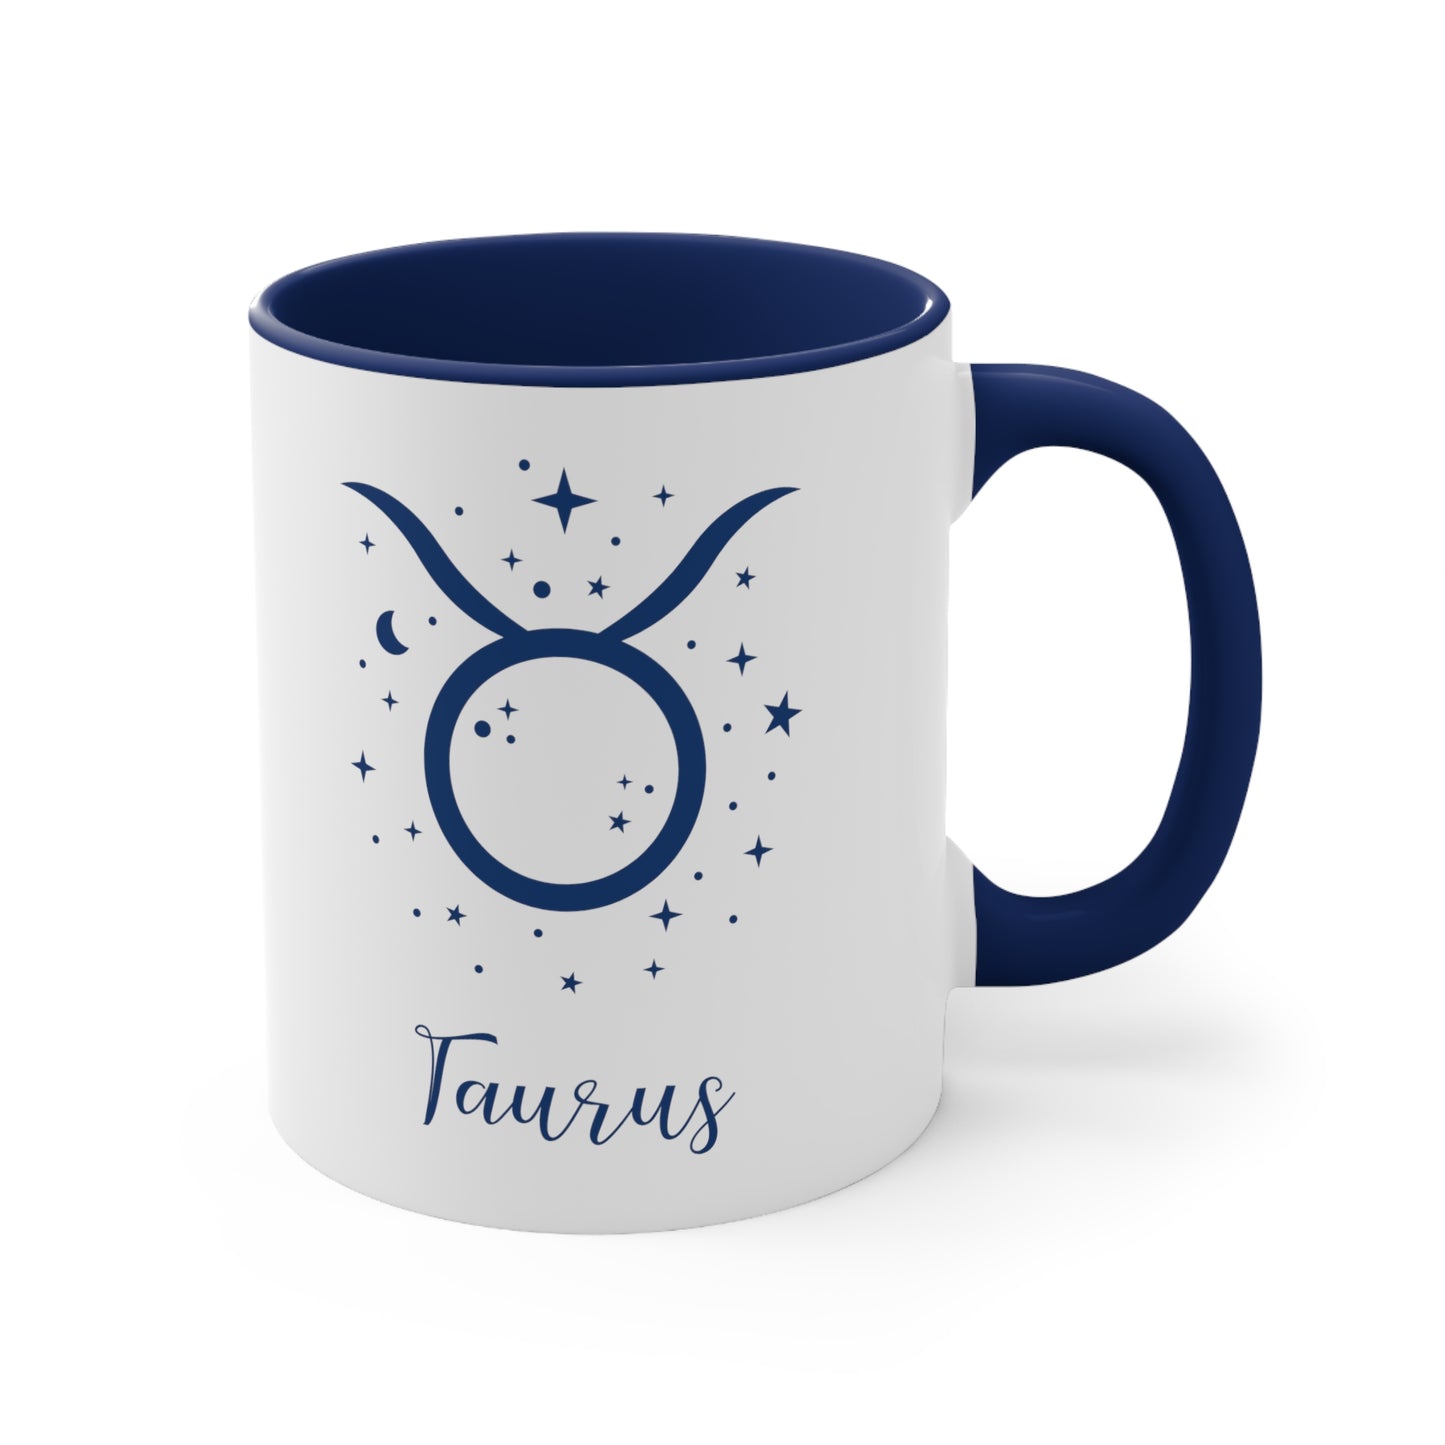 Taurus glyph & stars coffee mug